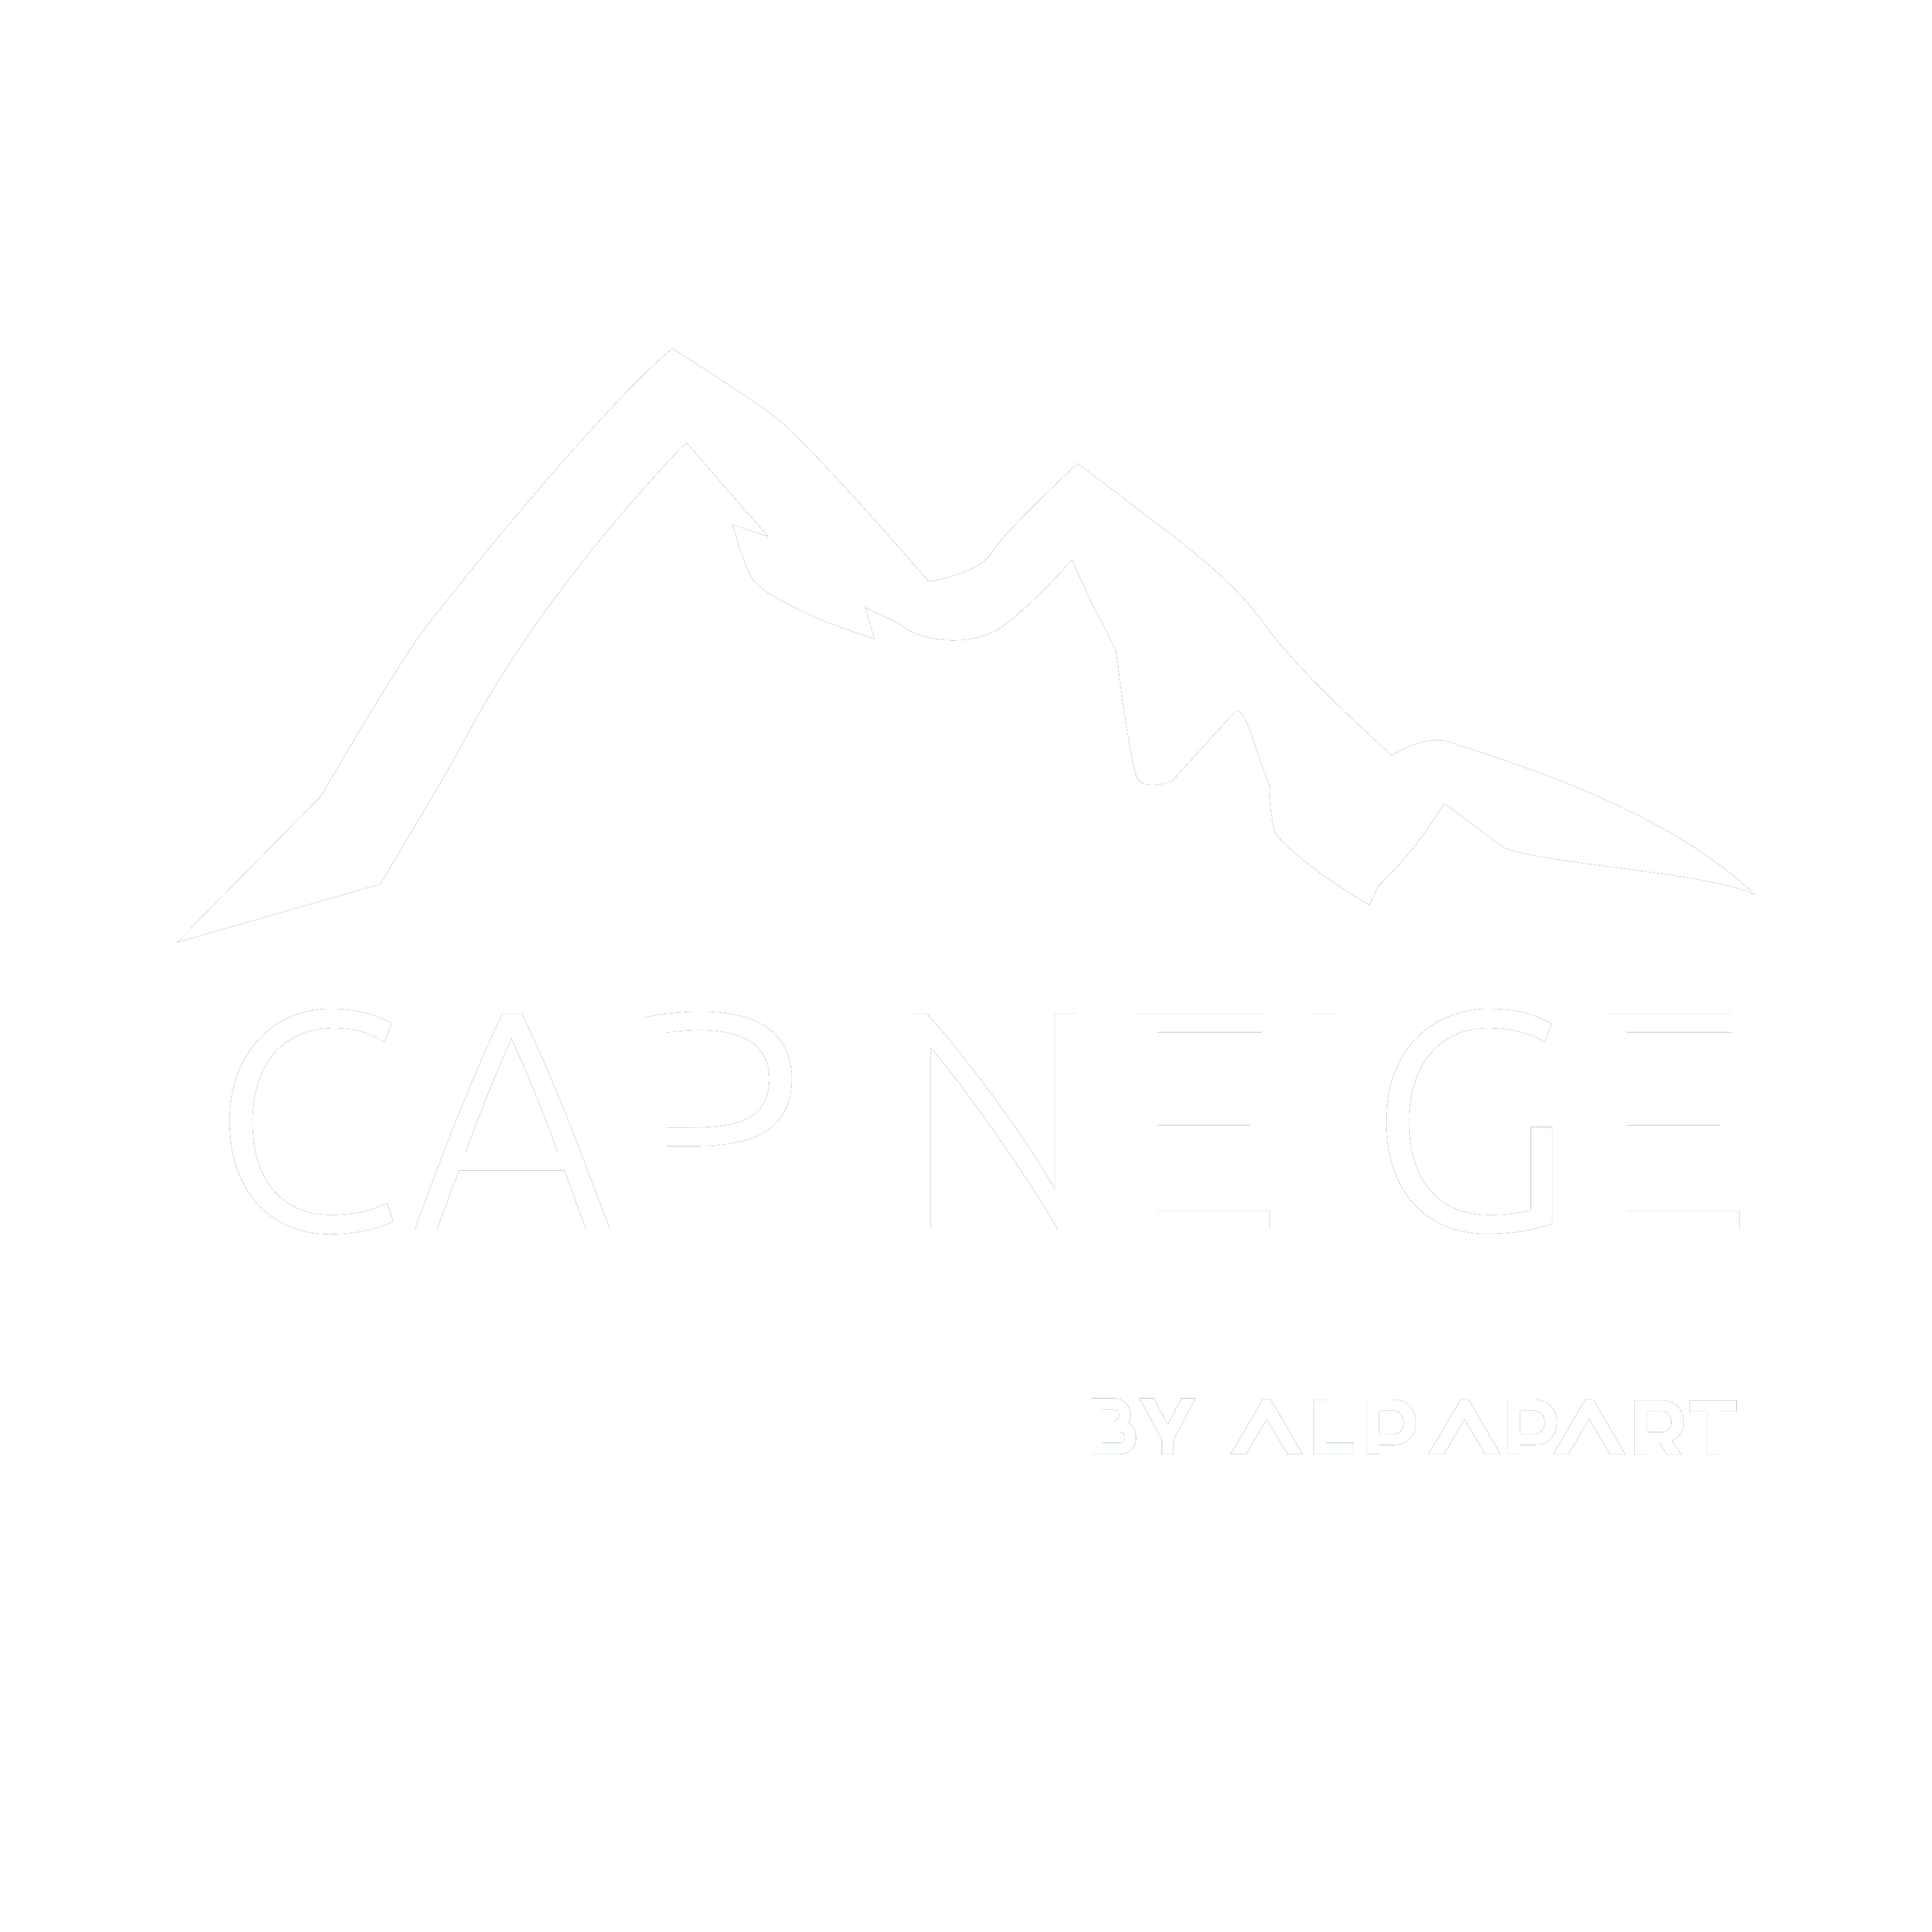 Cap Neige